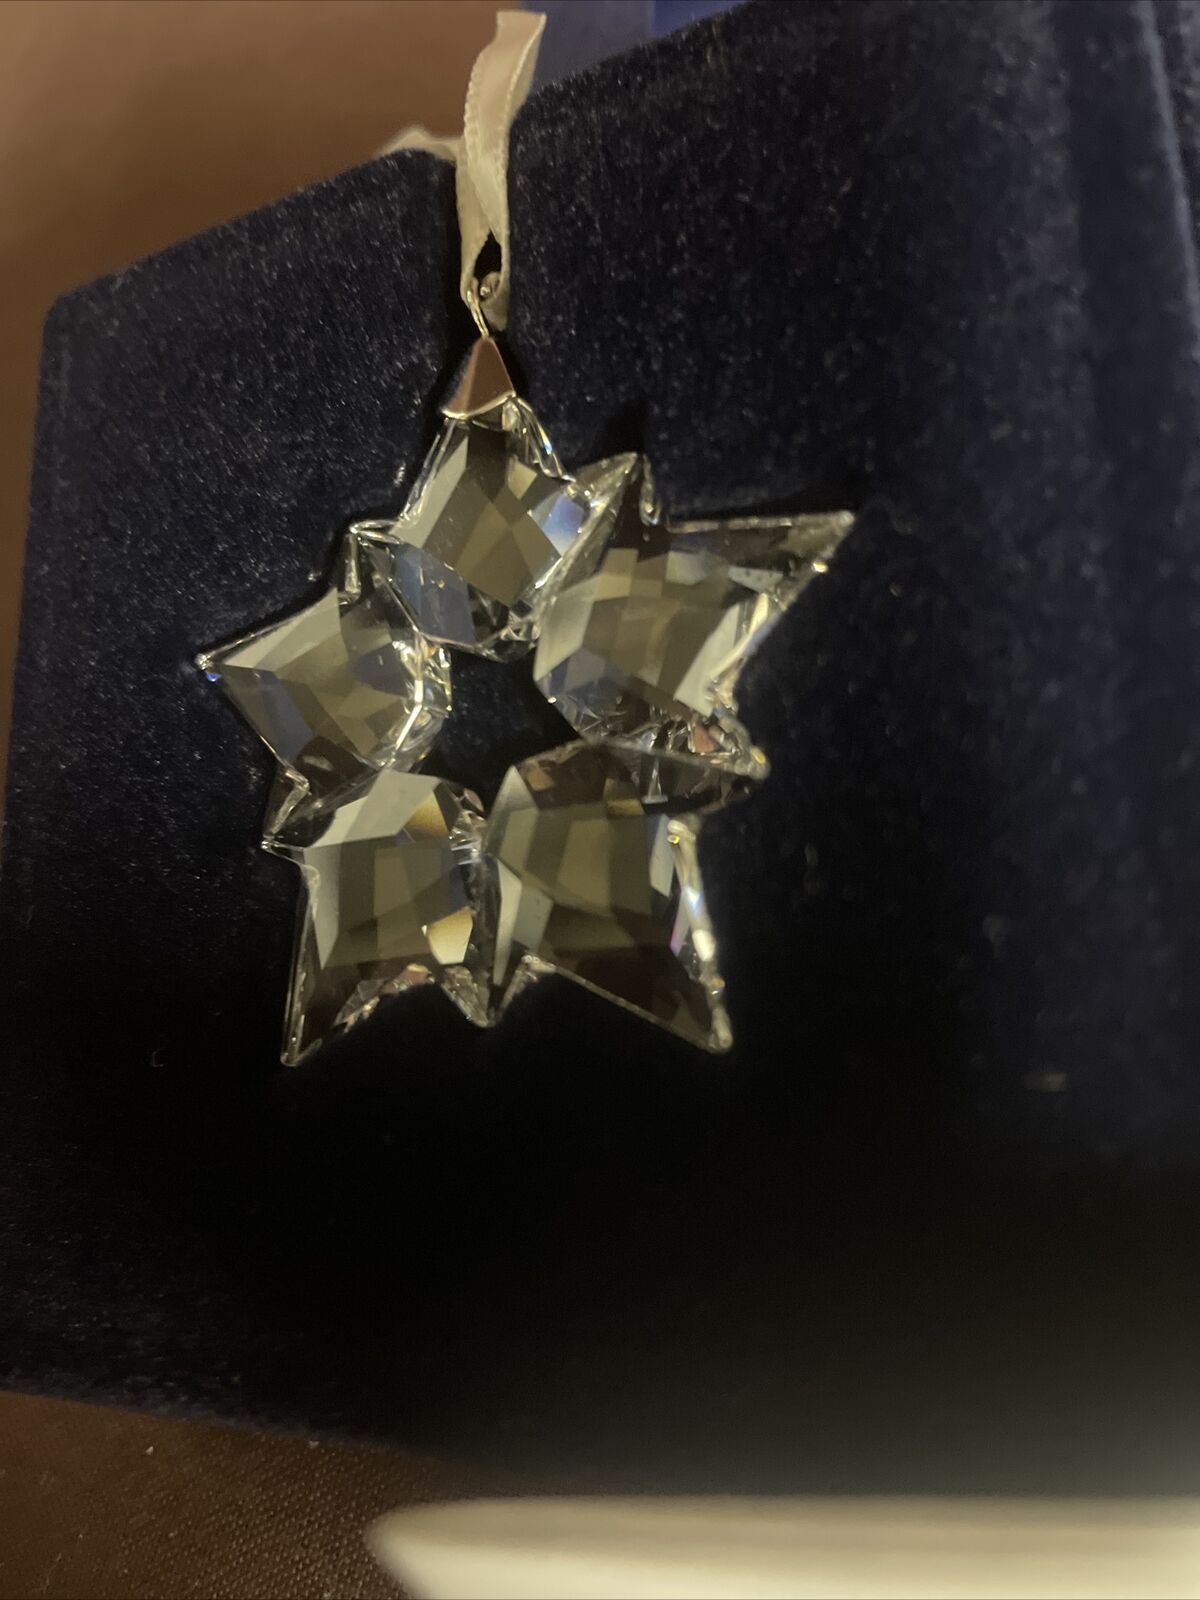 2019 Annual Edition Little Star Christmas Snowflake Ornament 5429593